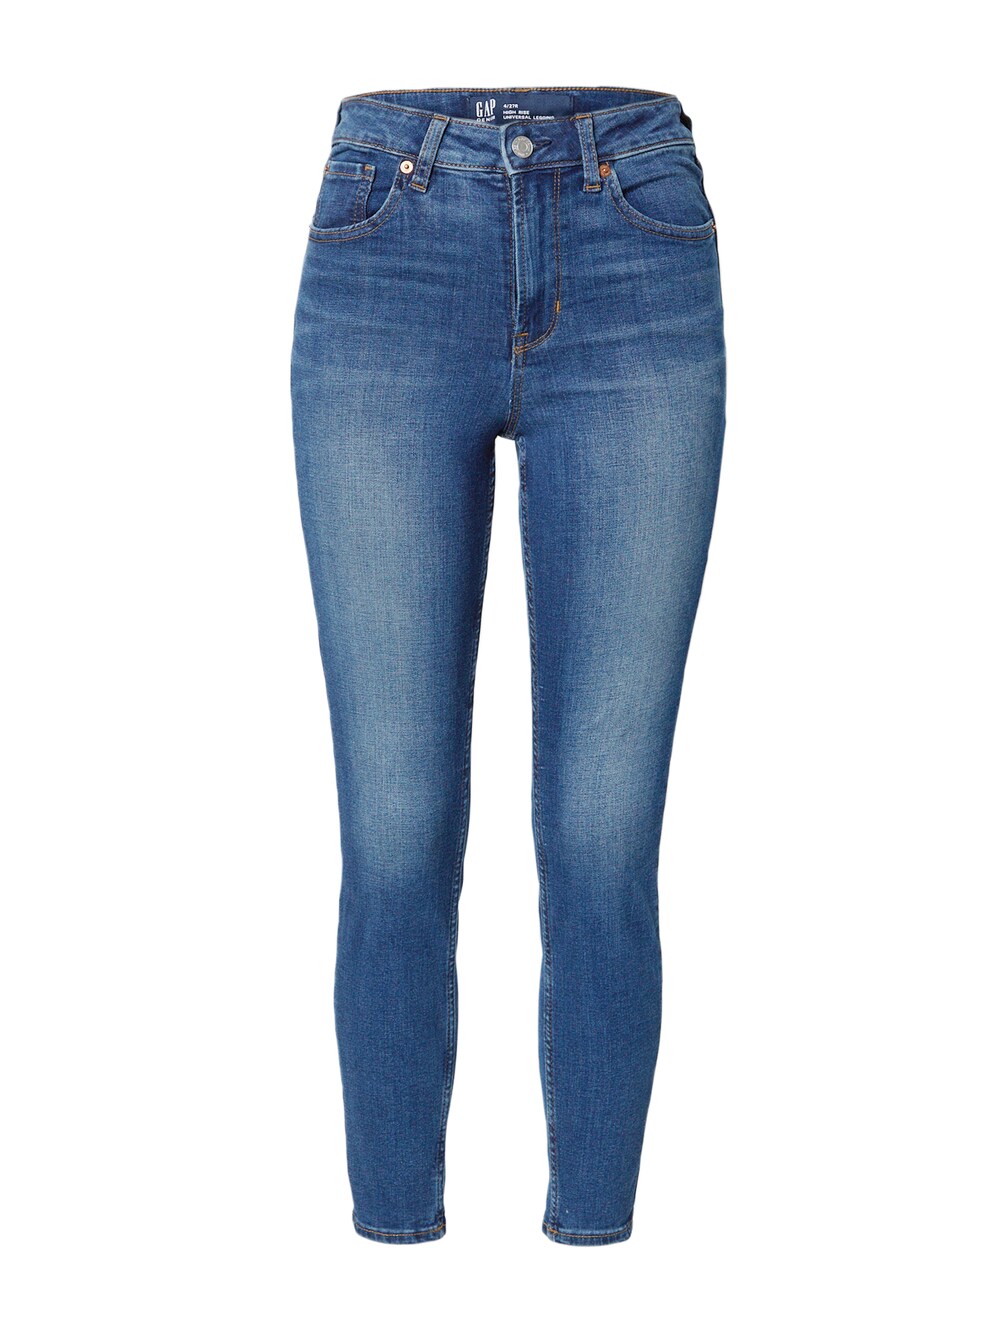 Узкие джинсы Gap CHARLOTTE, синий узкие джинсы gap черный